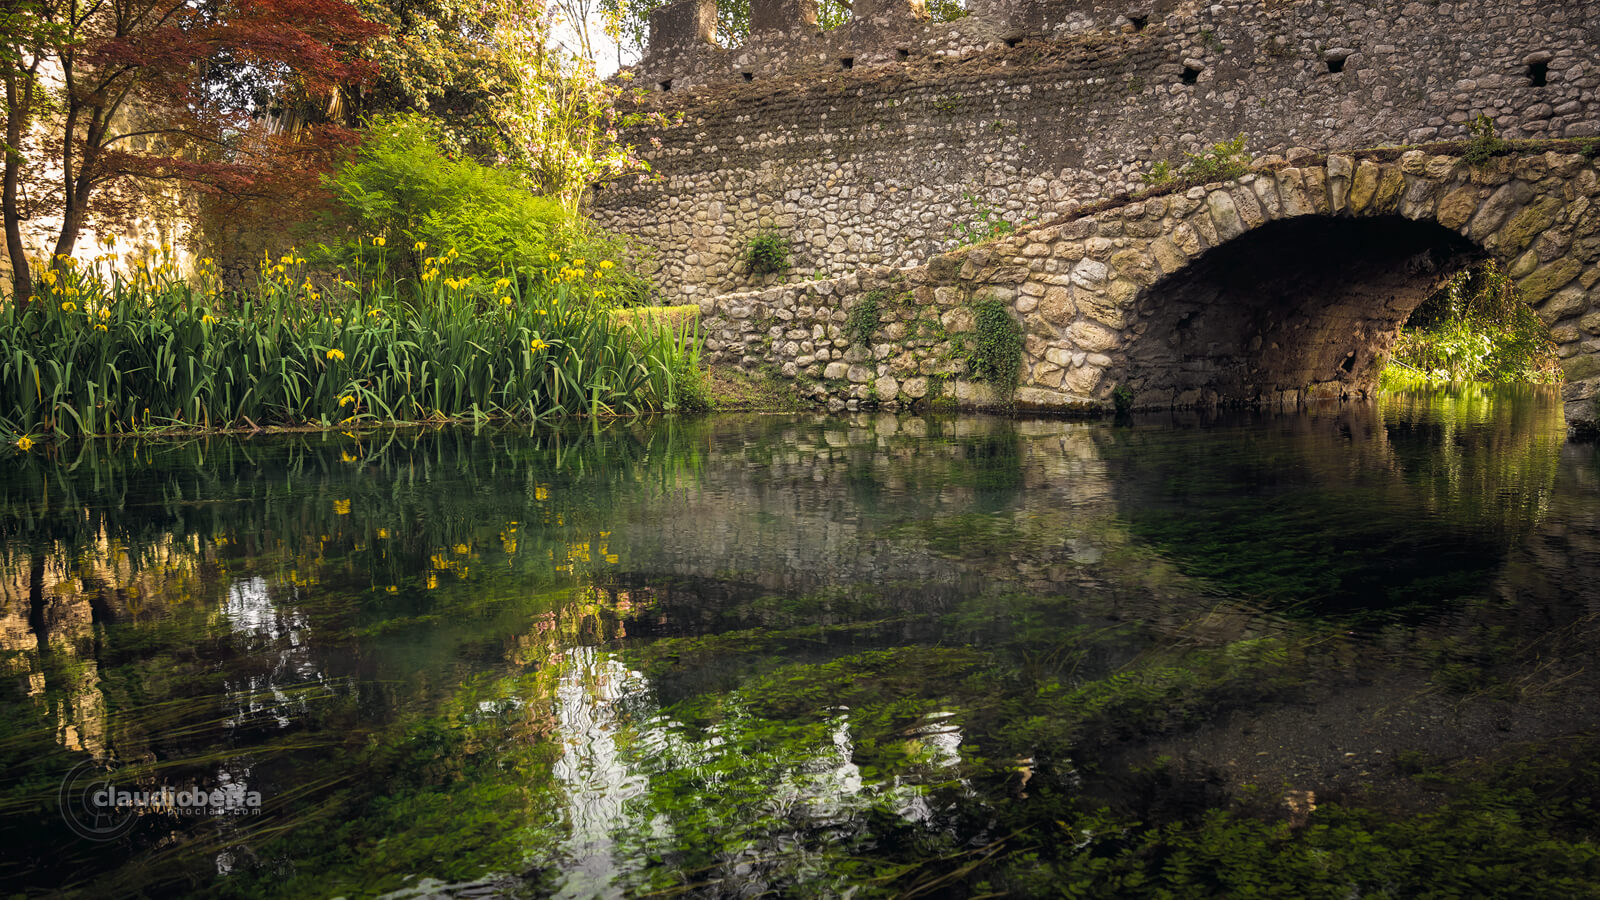 Garden of Ninfa, Garden, Ninfa, Italy, River of time, Nature, River, Bridge, Spring, Travel, Travel Photography, Ancient, Romantic